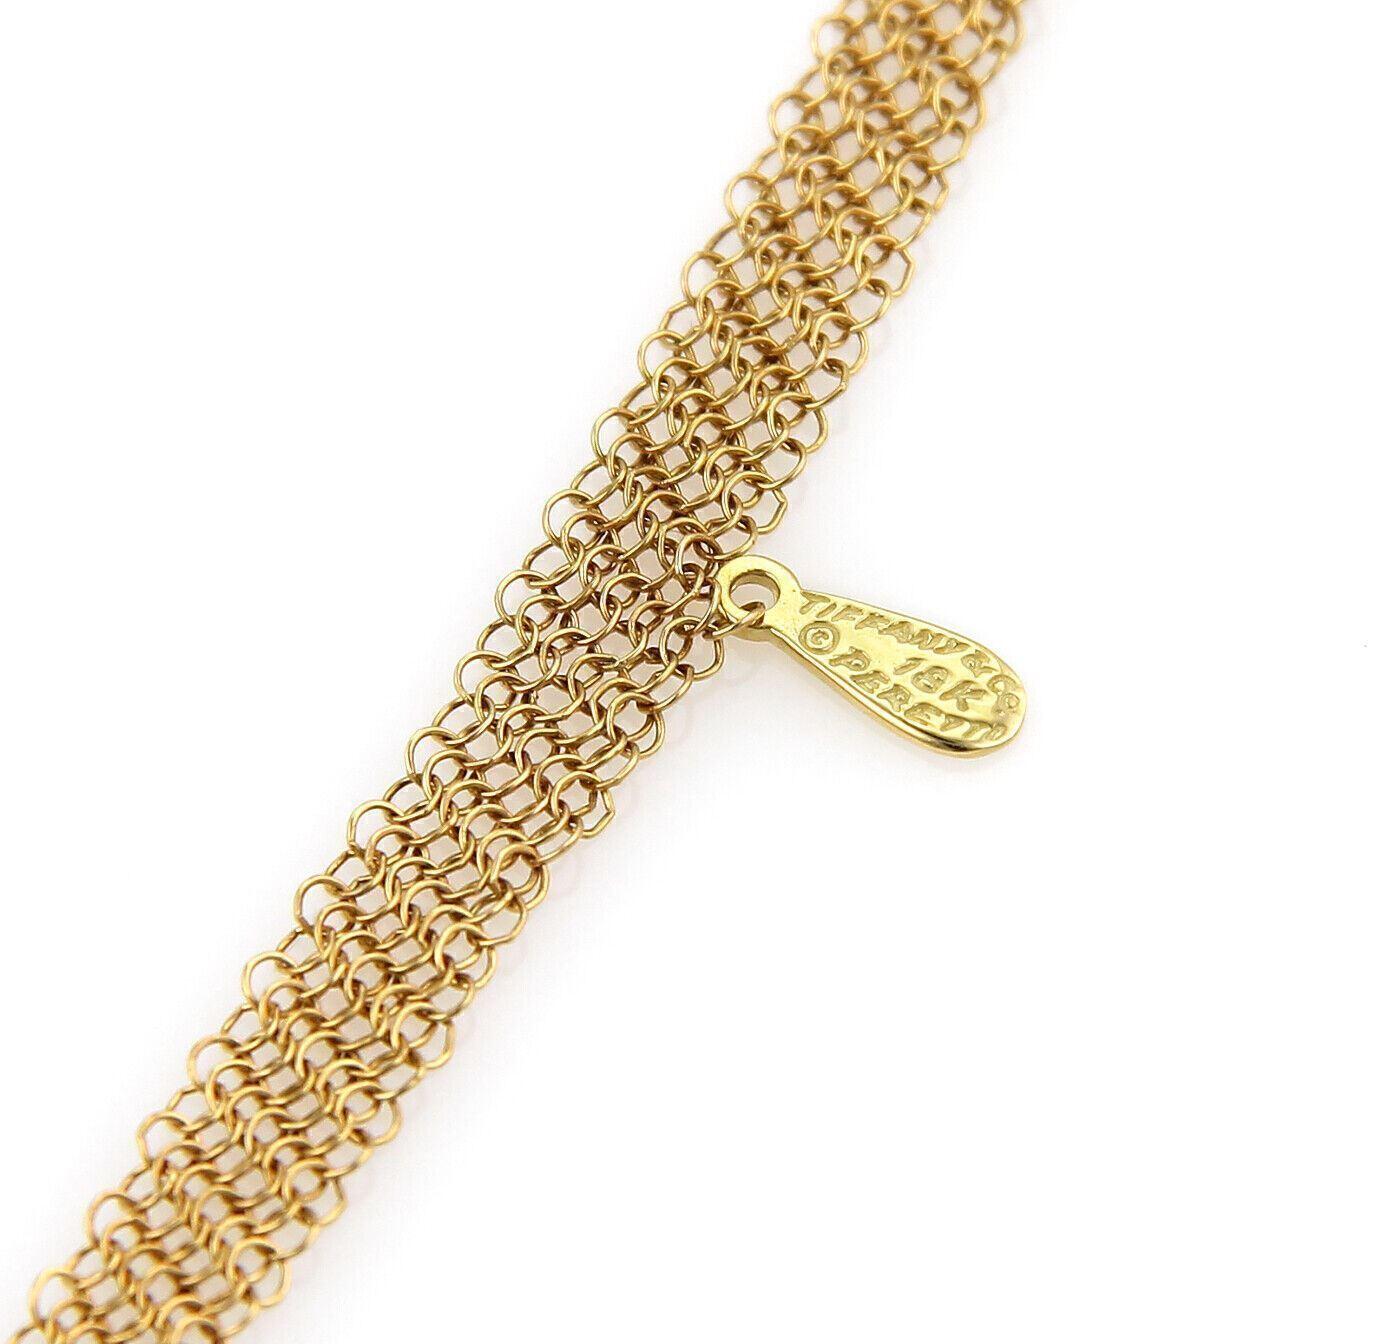 Brand: Tiffany & Co. 
Hallmark: Tiffany & Co. 18k Peretti       
Material: 18k yellow gold
Measurements:  Chain is: 30